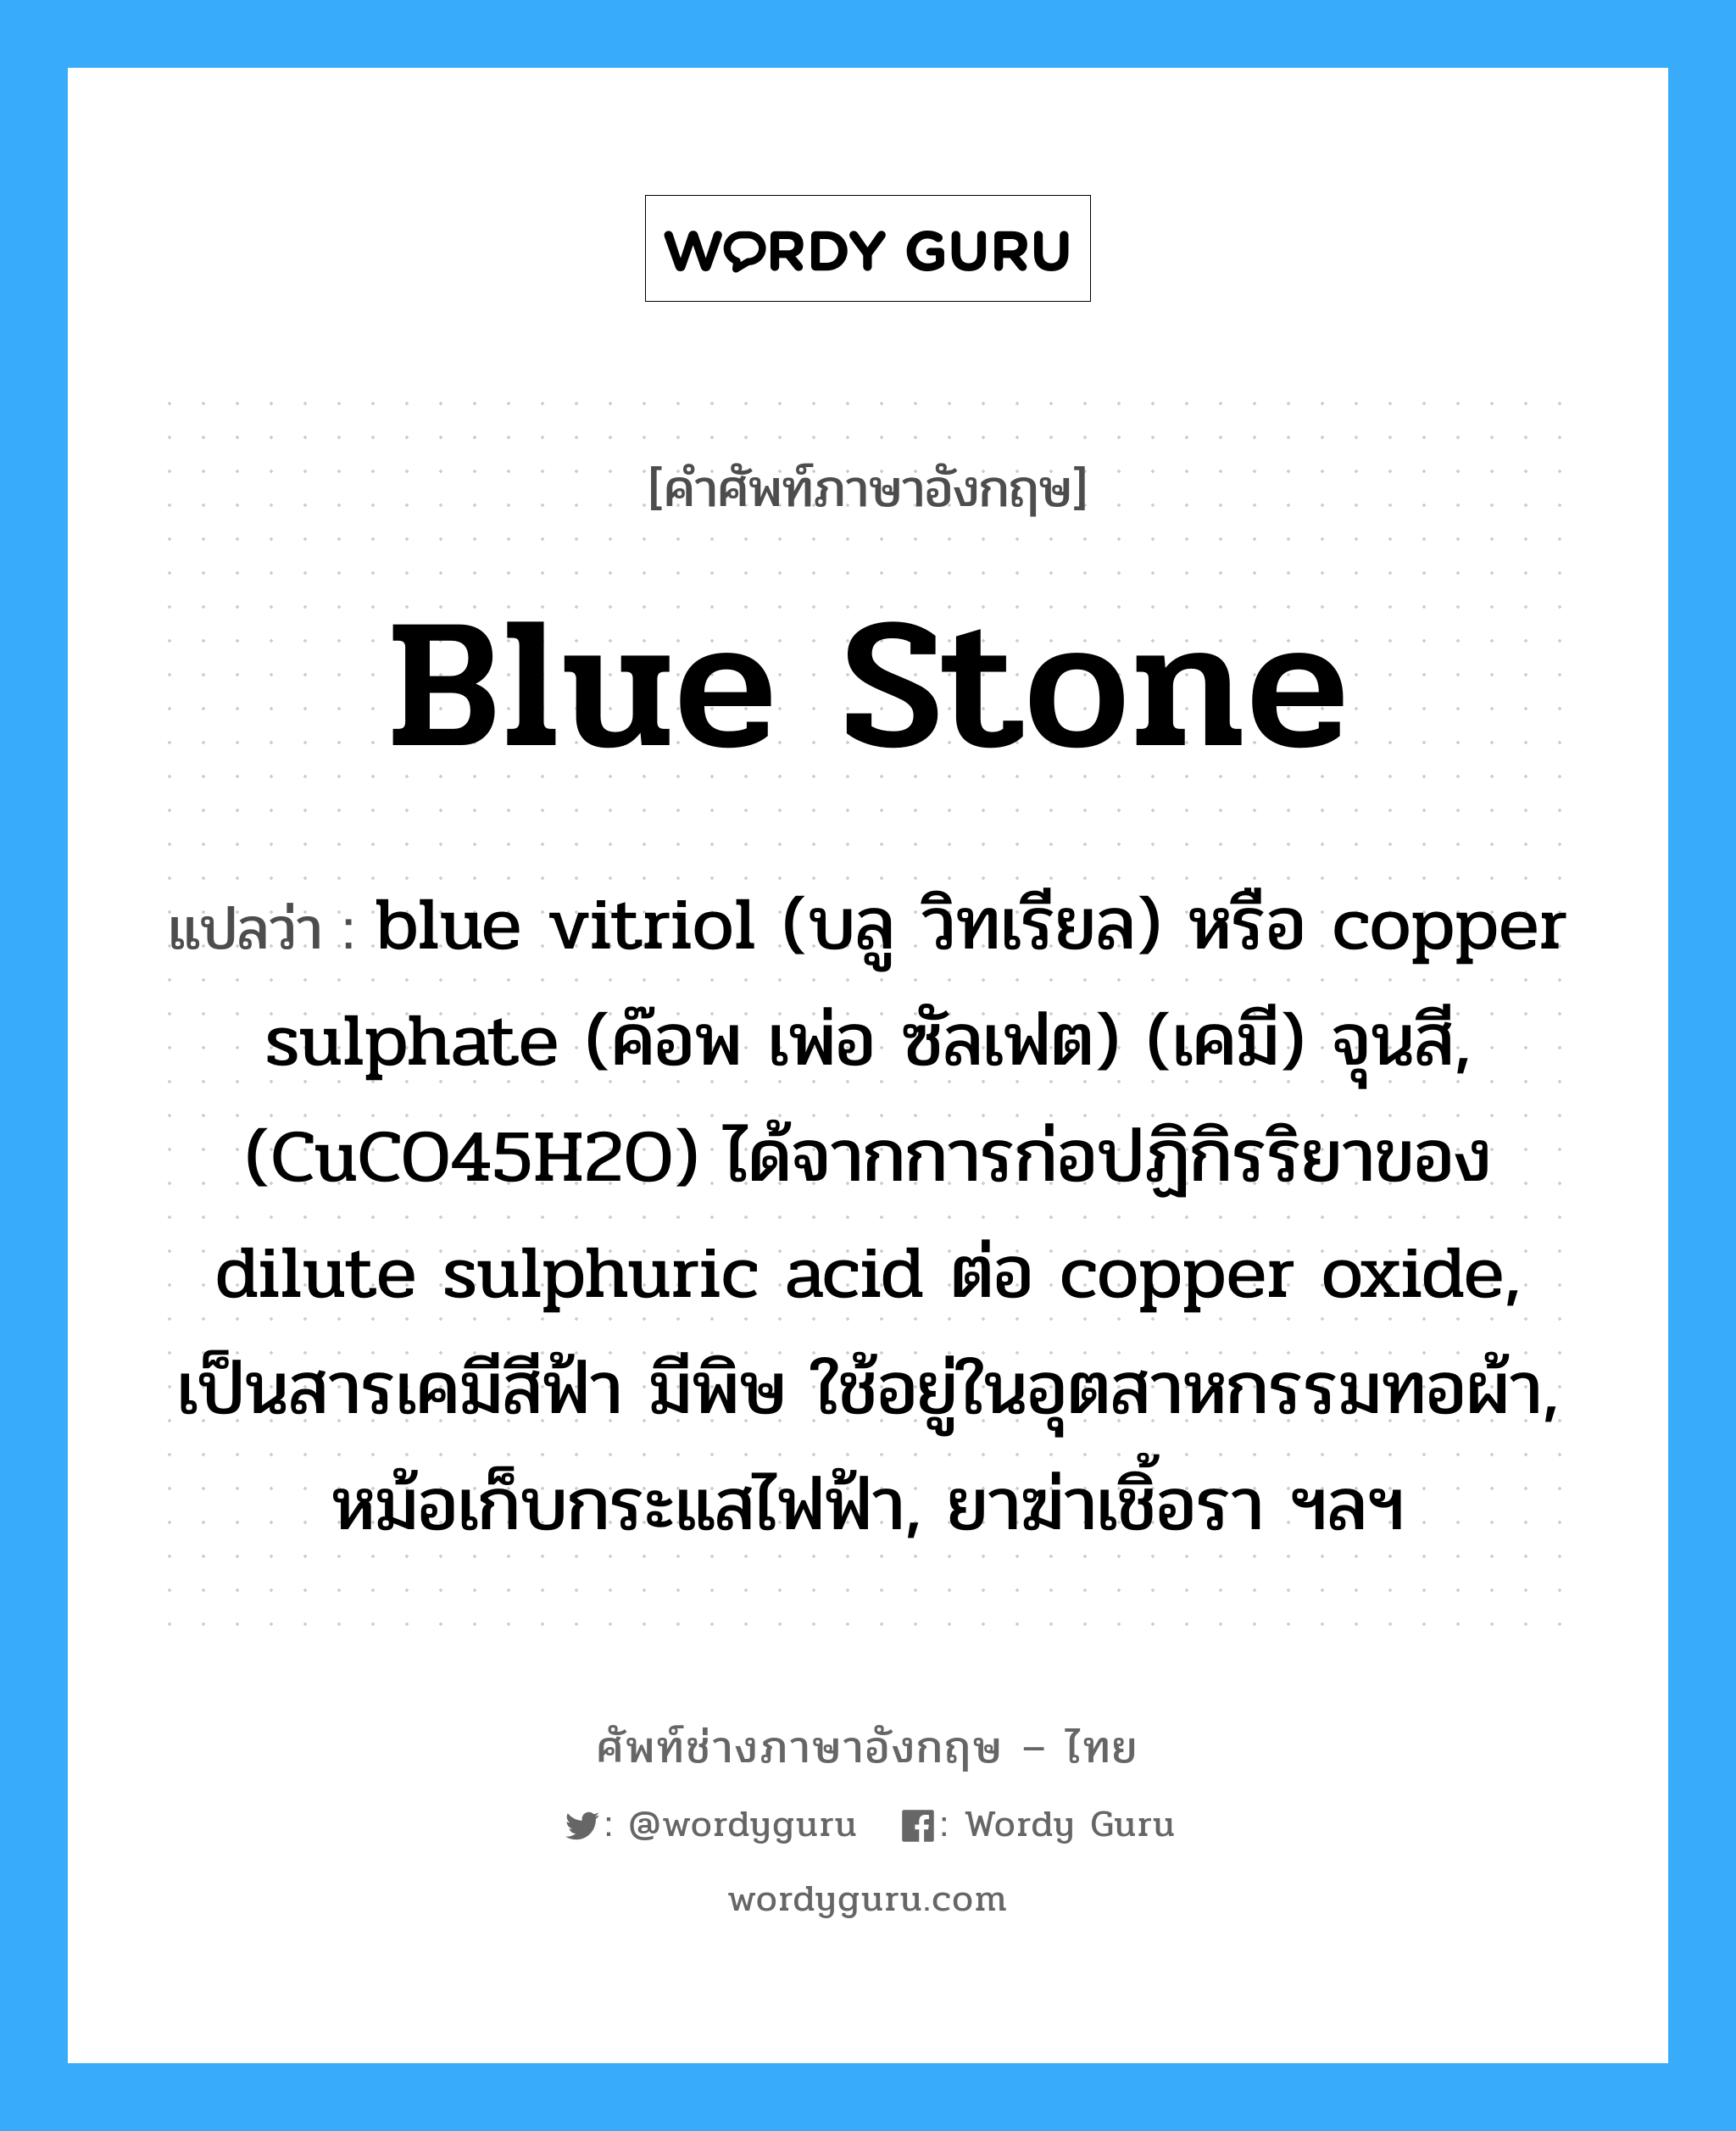 blue stone แปลว่า?, คำศัพท์ช่างภาษาอังกฤษ - ไทย blue stone คำศัพท์ภาษาอังกฤษ blue stone แปลว่า blue vitriol (บลู วิทเรียล) หรือ copper sulphate (ค๊อพ เพ่อ ซัลเฟต) (เคมี) จุนสี, (CuCO45H2O) ได้จากการก่อปฏิกิรริยาของ dilute sulphuric acid ต่อ copper oxide, เป็นสารเคมีสีฟ้า มีพิษ ใช้อยู่ในอุตสาหกรรมทอผ้า, หม้อเก็บกระแสไฟฟ้า, ยาฆ่าเชิ้อรา ฯลฯ